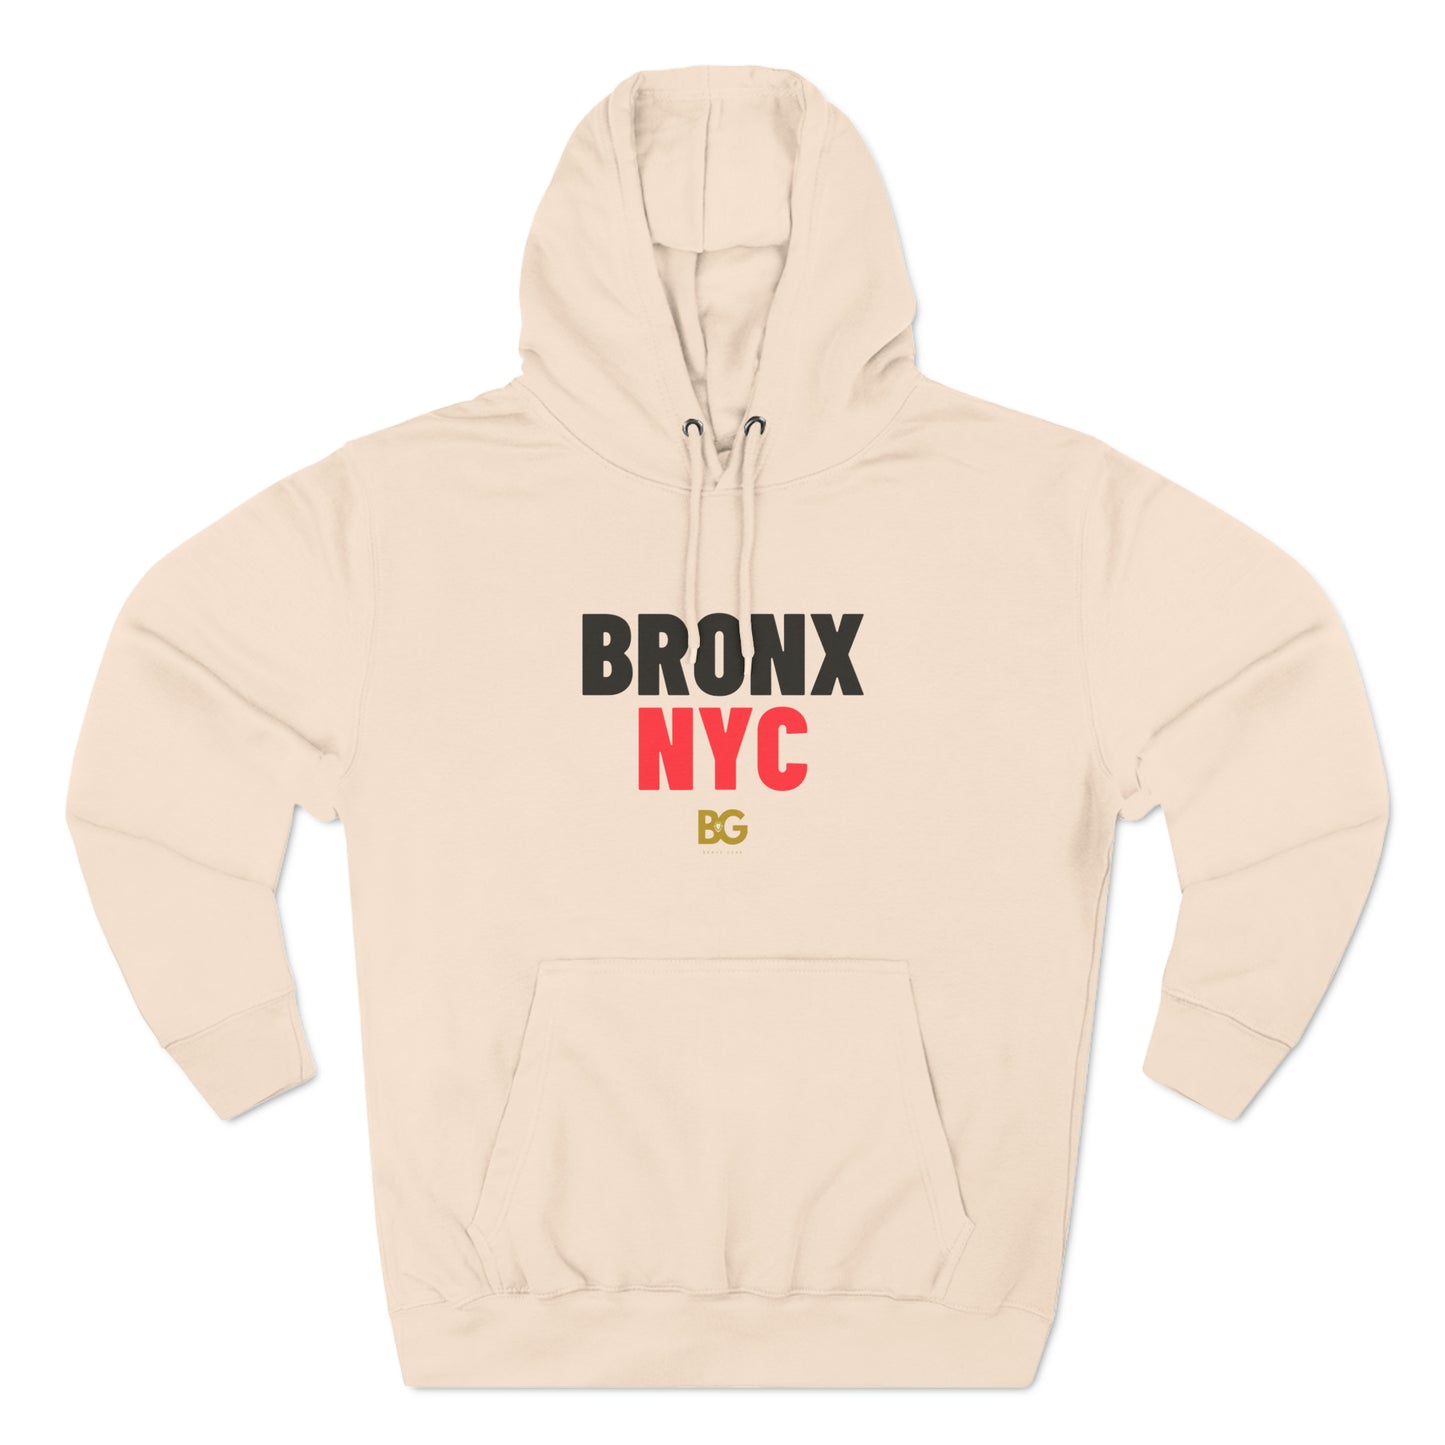 BG "Bronx NYC" Premium Pullover Hoodie